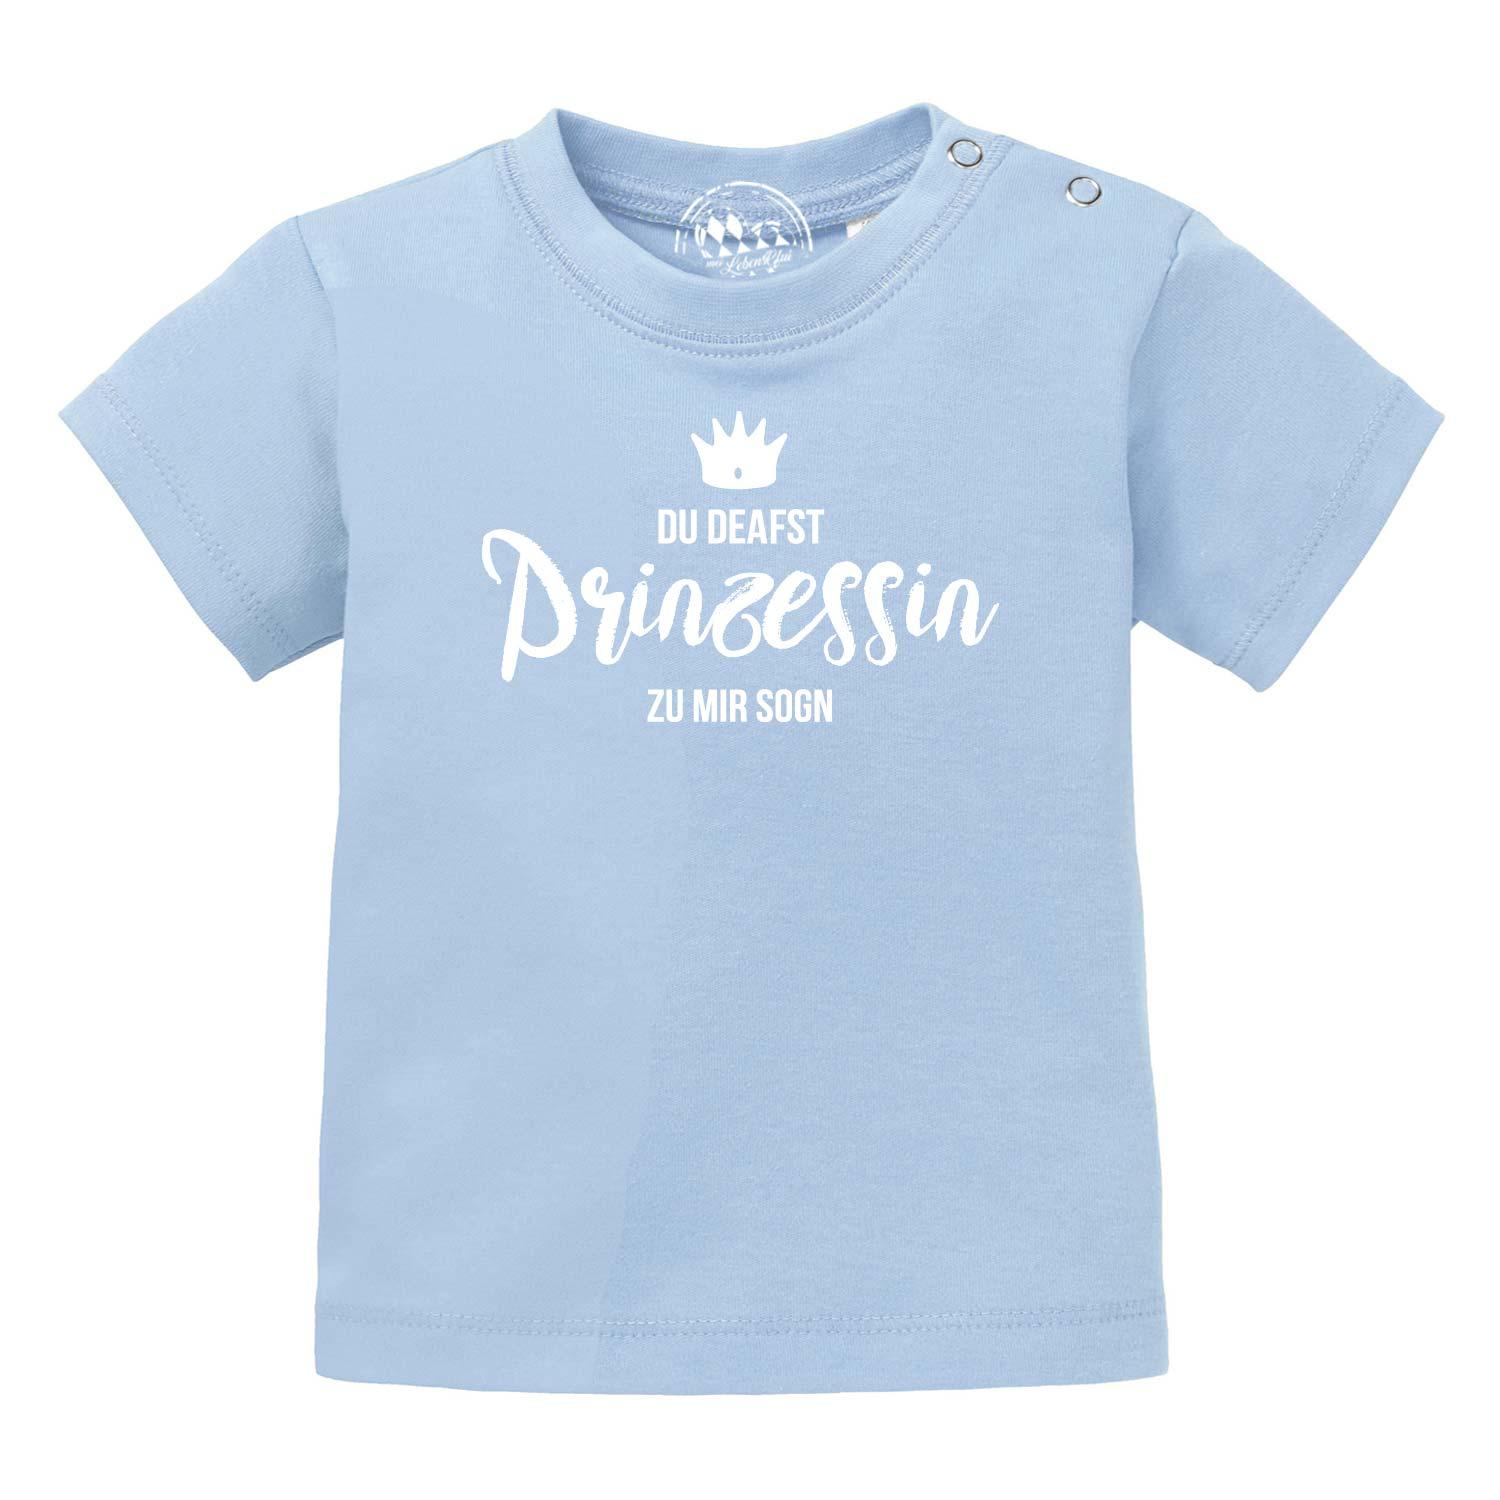 Baby T-Shirt "Prinzessin" - bavariashop - mei LebensGfui